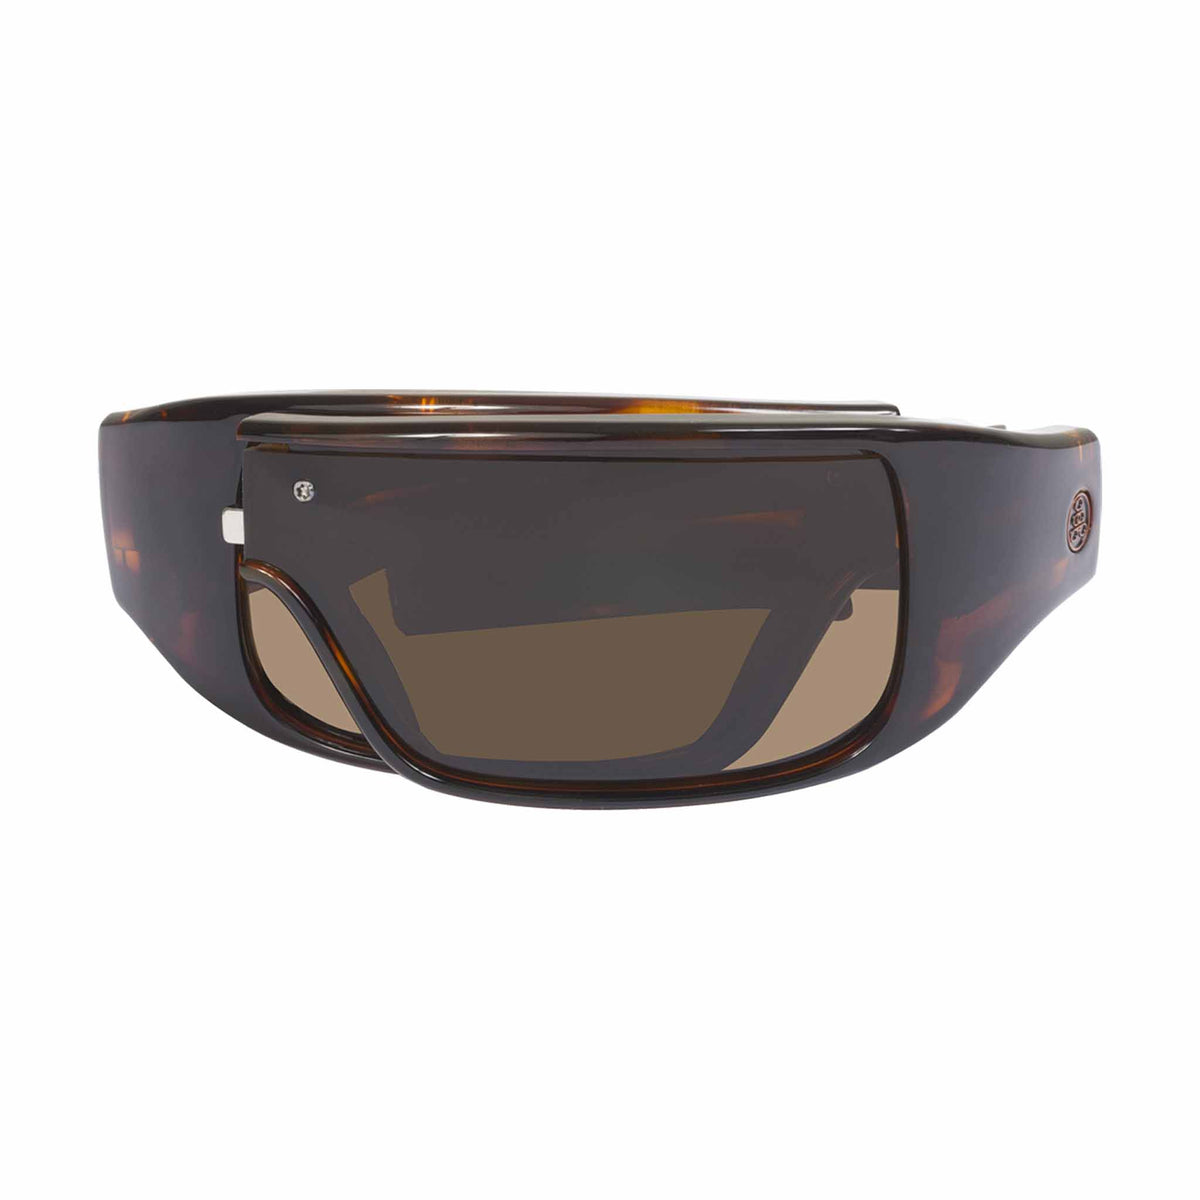 Popticals, Premium Compact Sunglasses, PopGear, 010051-CTNP, Polarized Sunglasses, Gloss Tortoise Frame , Brown Lenses, Compact View